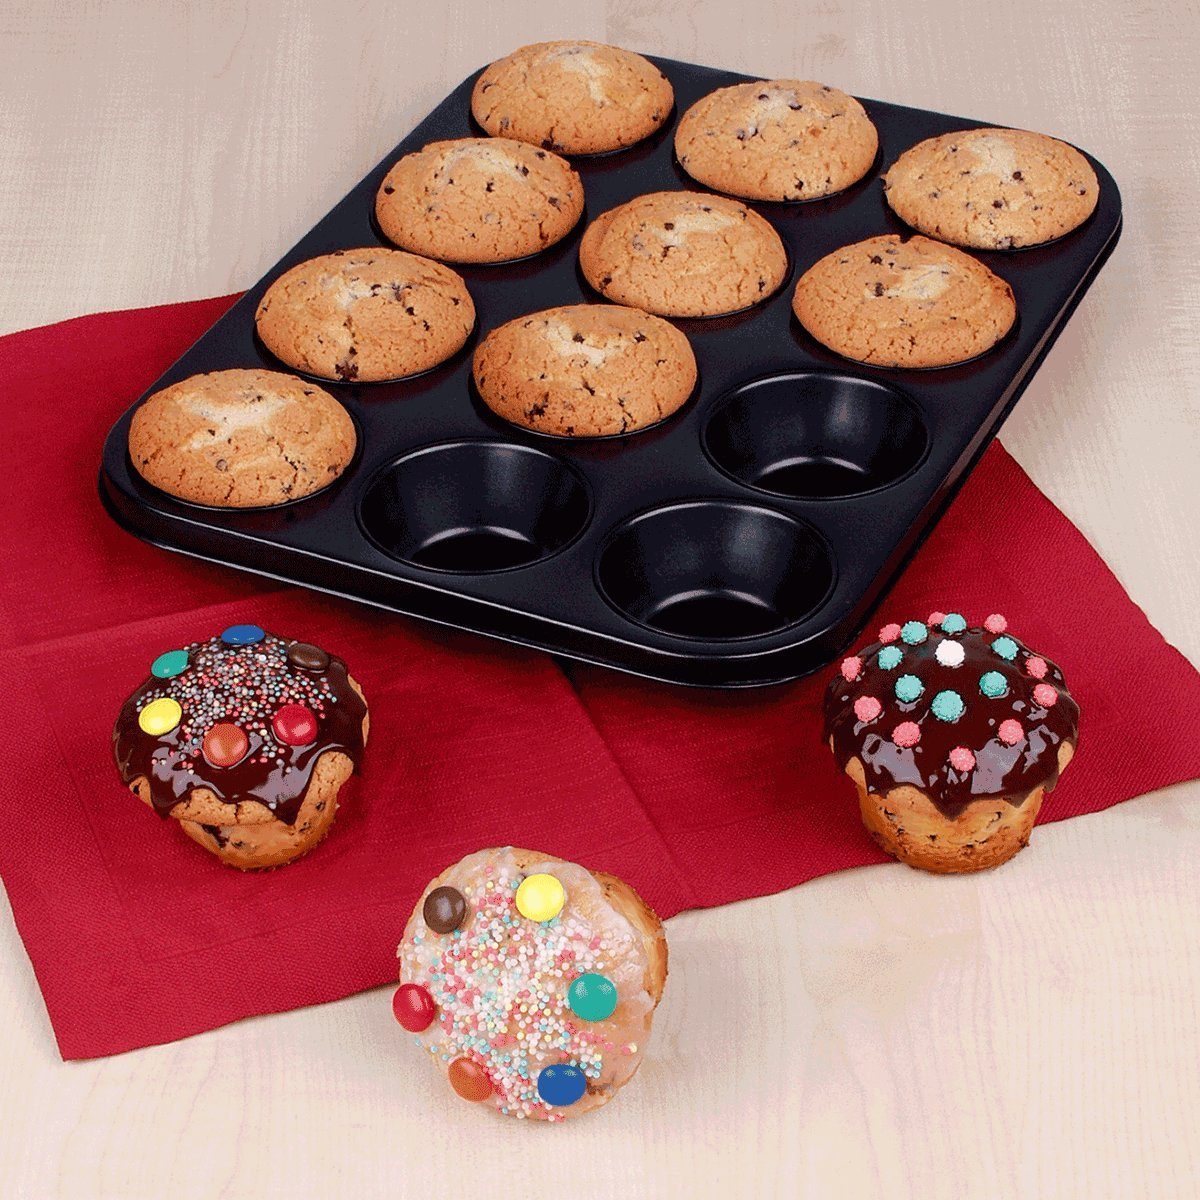 EUROHOME Muffinform Muffinblech 12er Mini Muffinblech Muffins Muffins 12 antihaft Backform, - Muffinform (1-tlg)